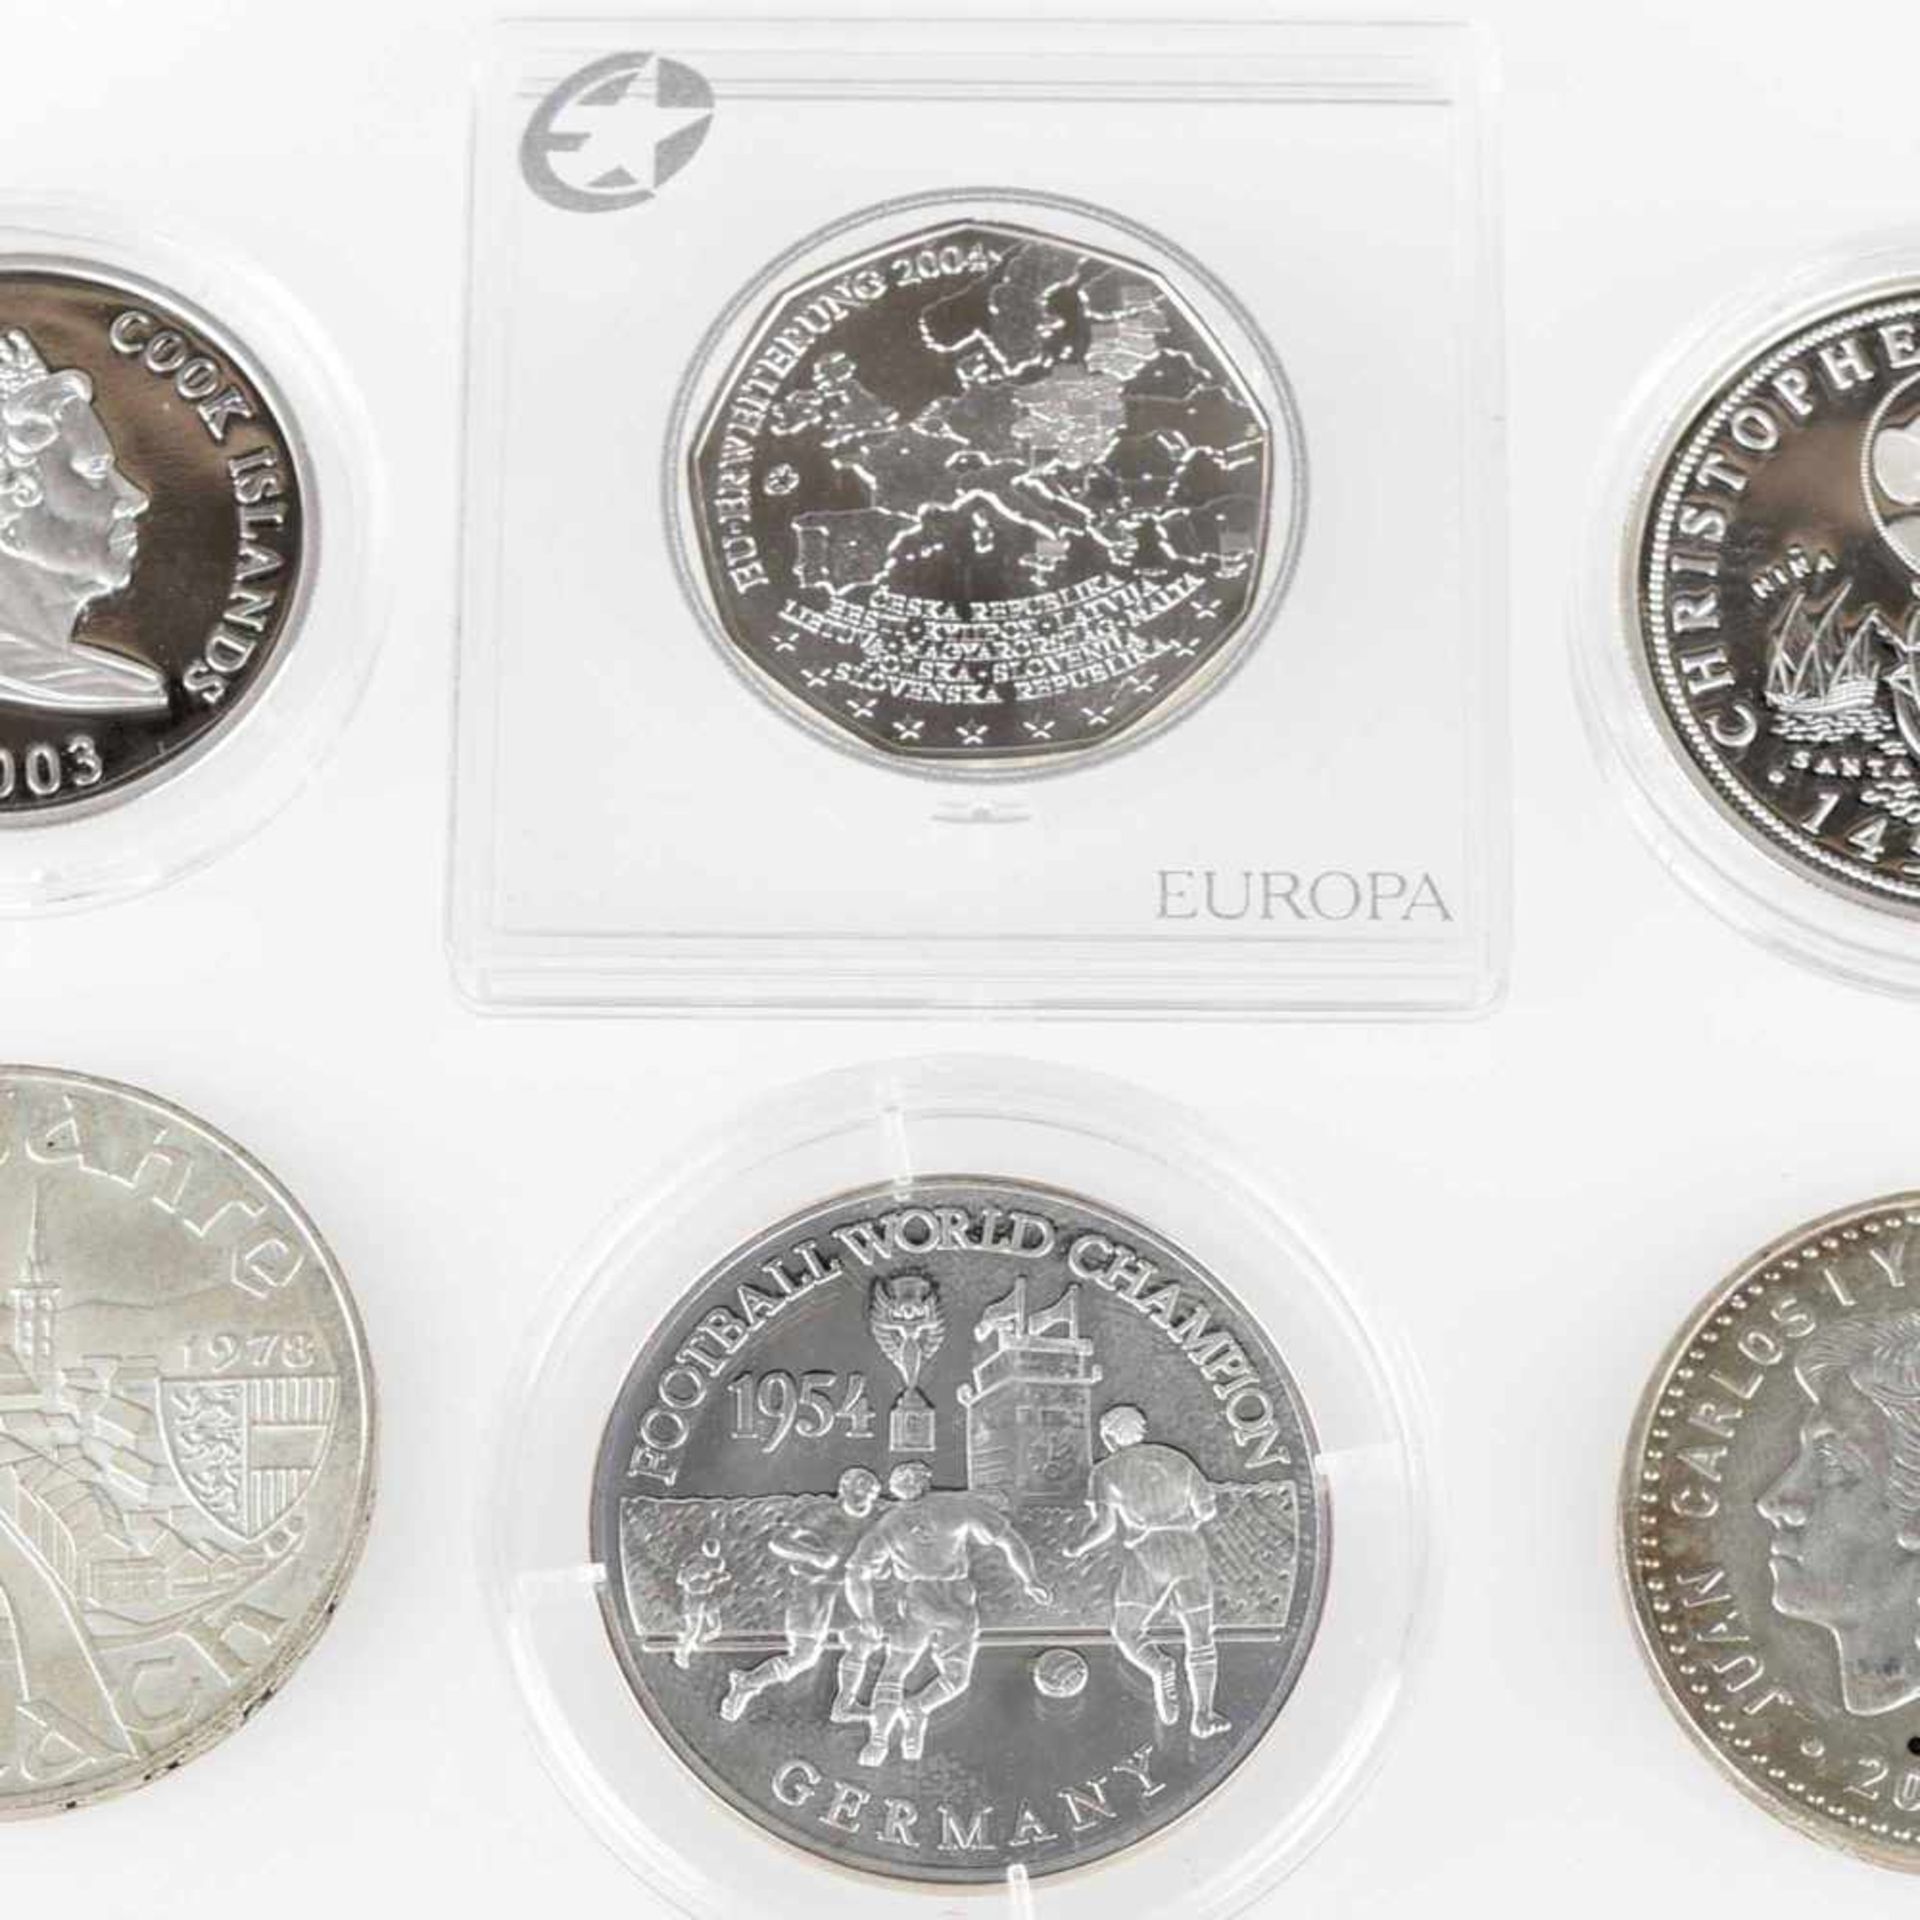 Konvolut Silbermünzen insg. 6 versch. Ausgaben: 1 x 100 Schilling Österreich (640/1000, 24 g, D 36